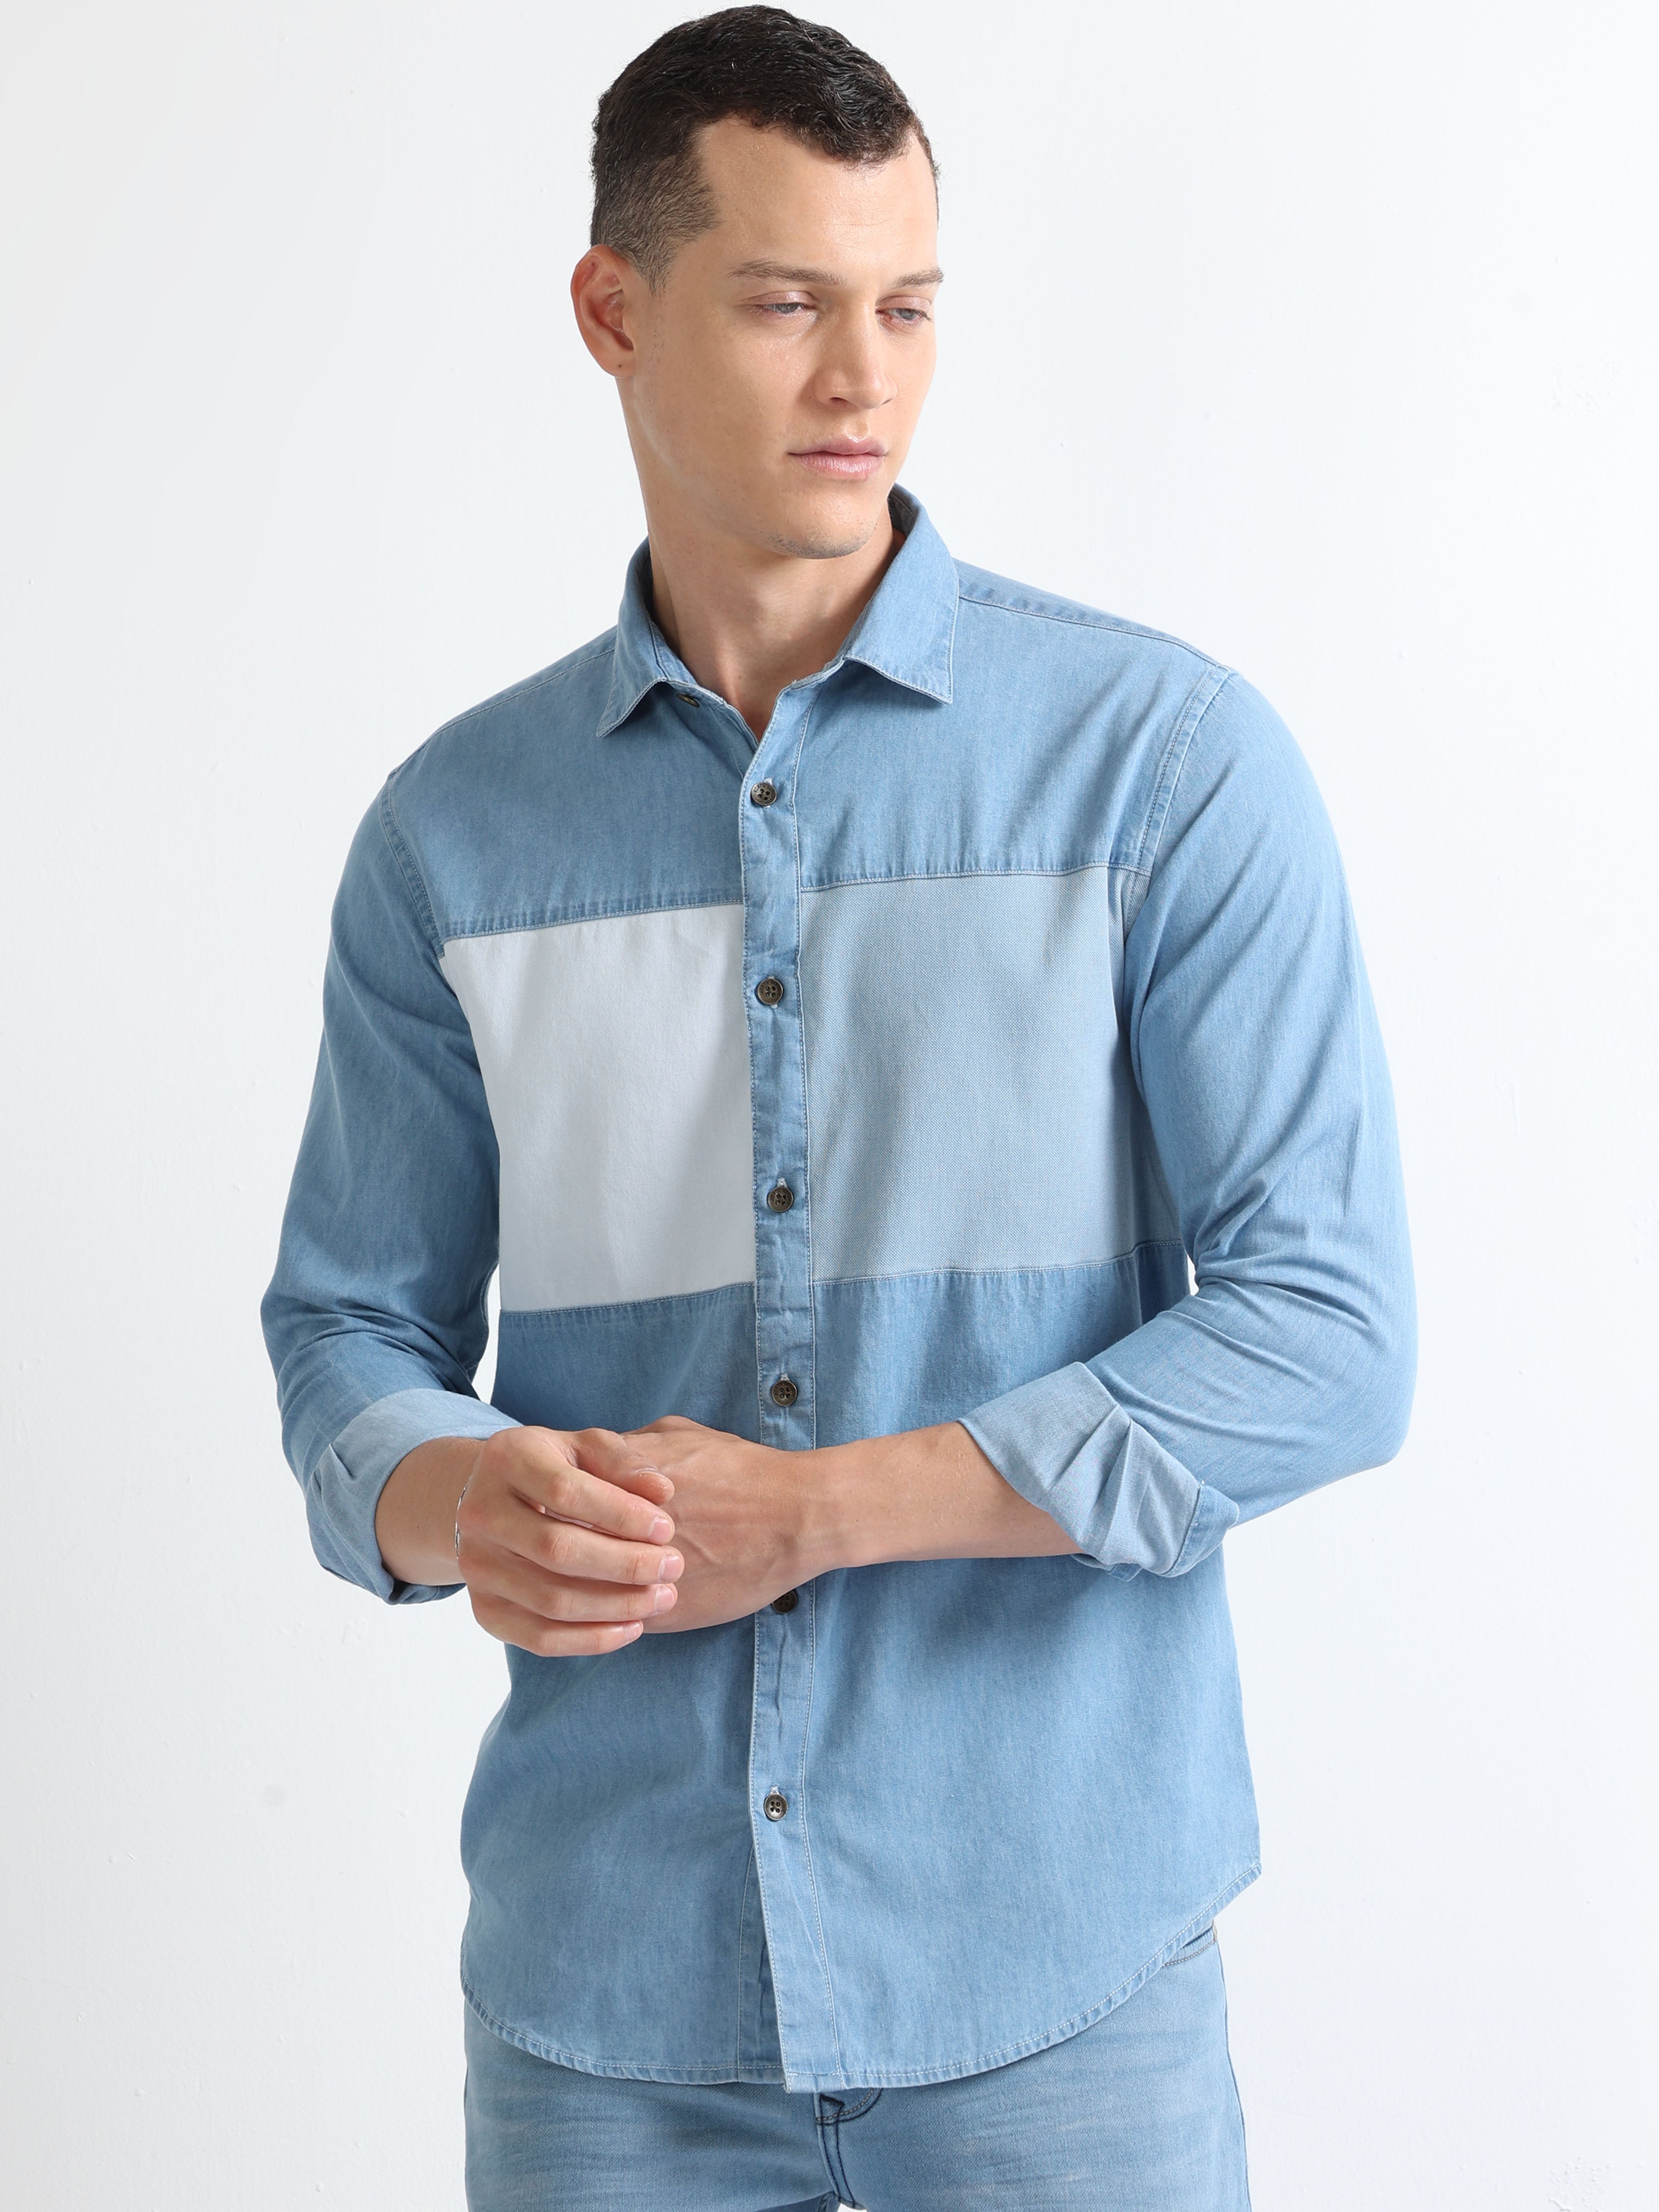 Buy Blue Corduroy New Plain Shirt at Great Price Online – Badmaash